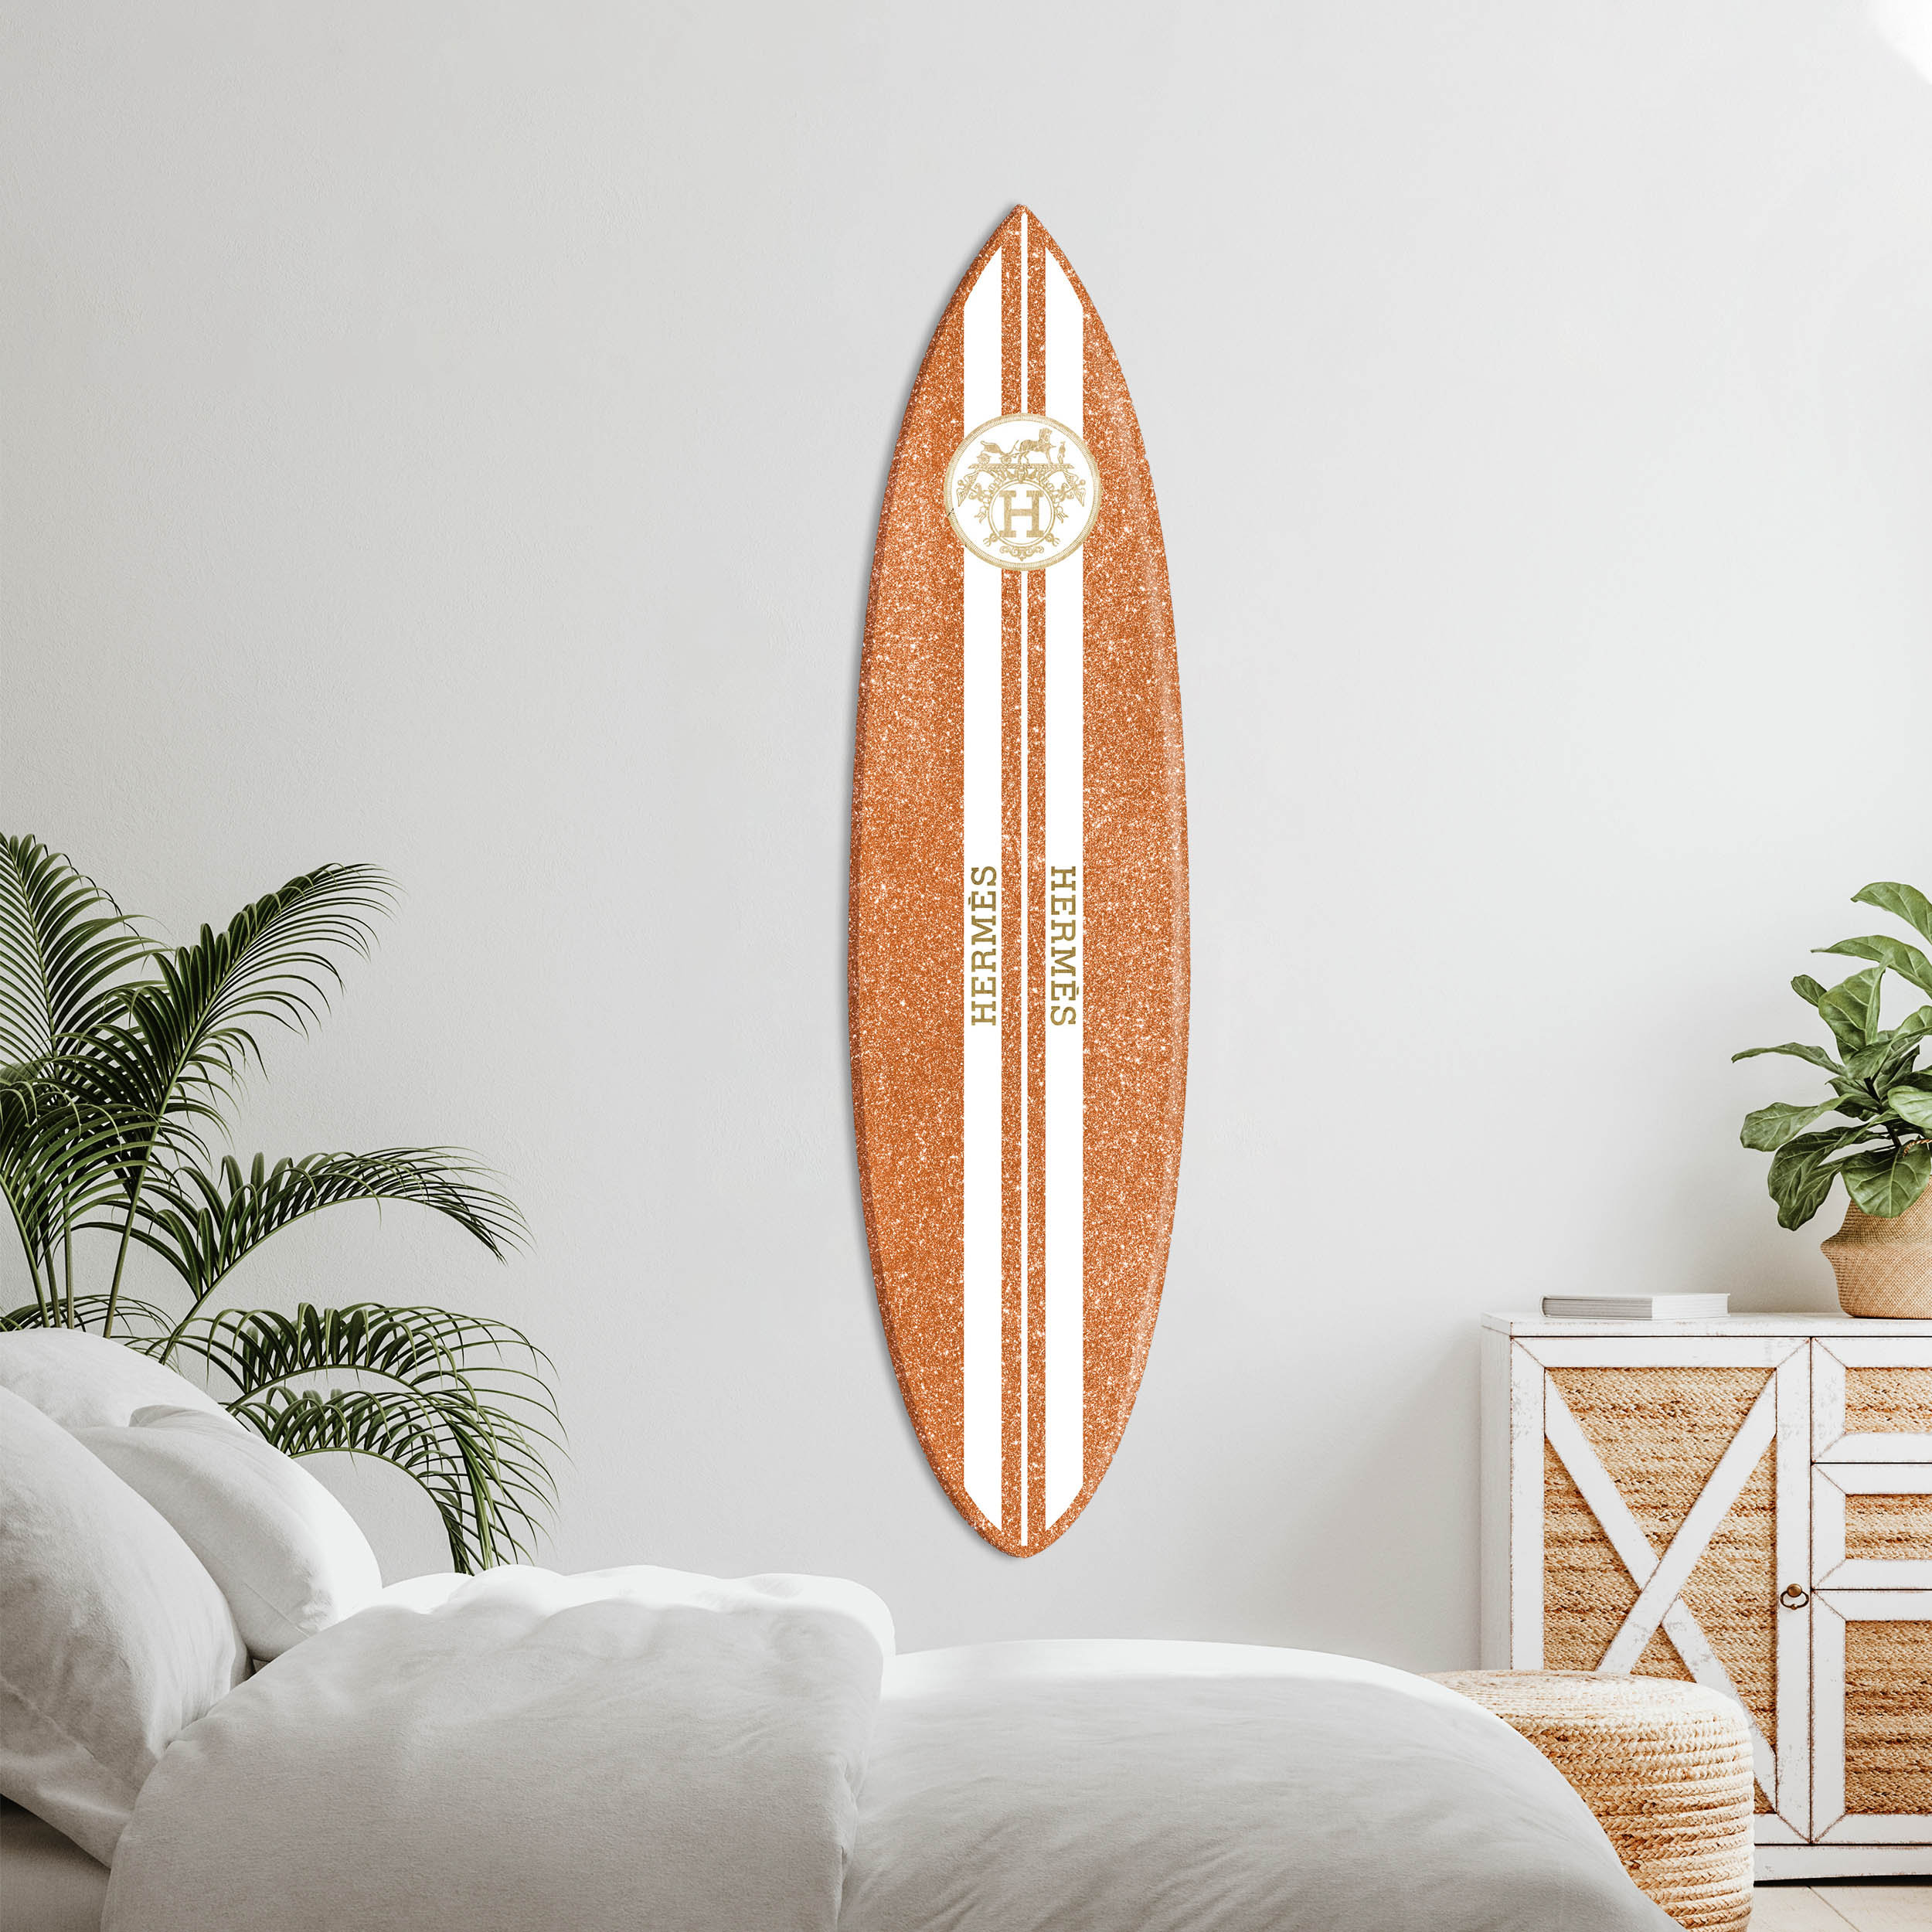 Oliver Gal C'est Chic Surfboard - Decorative Surfboard Wall Art